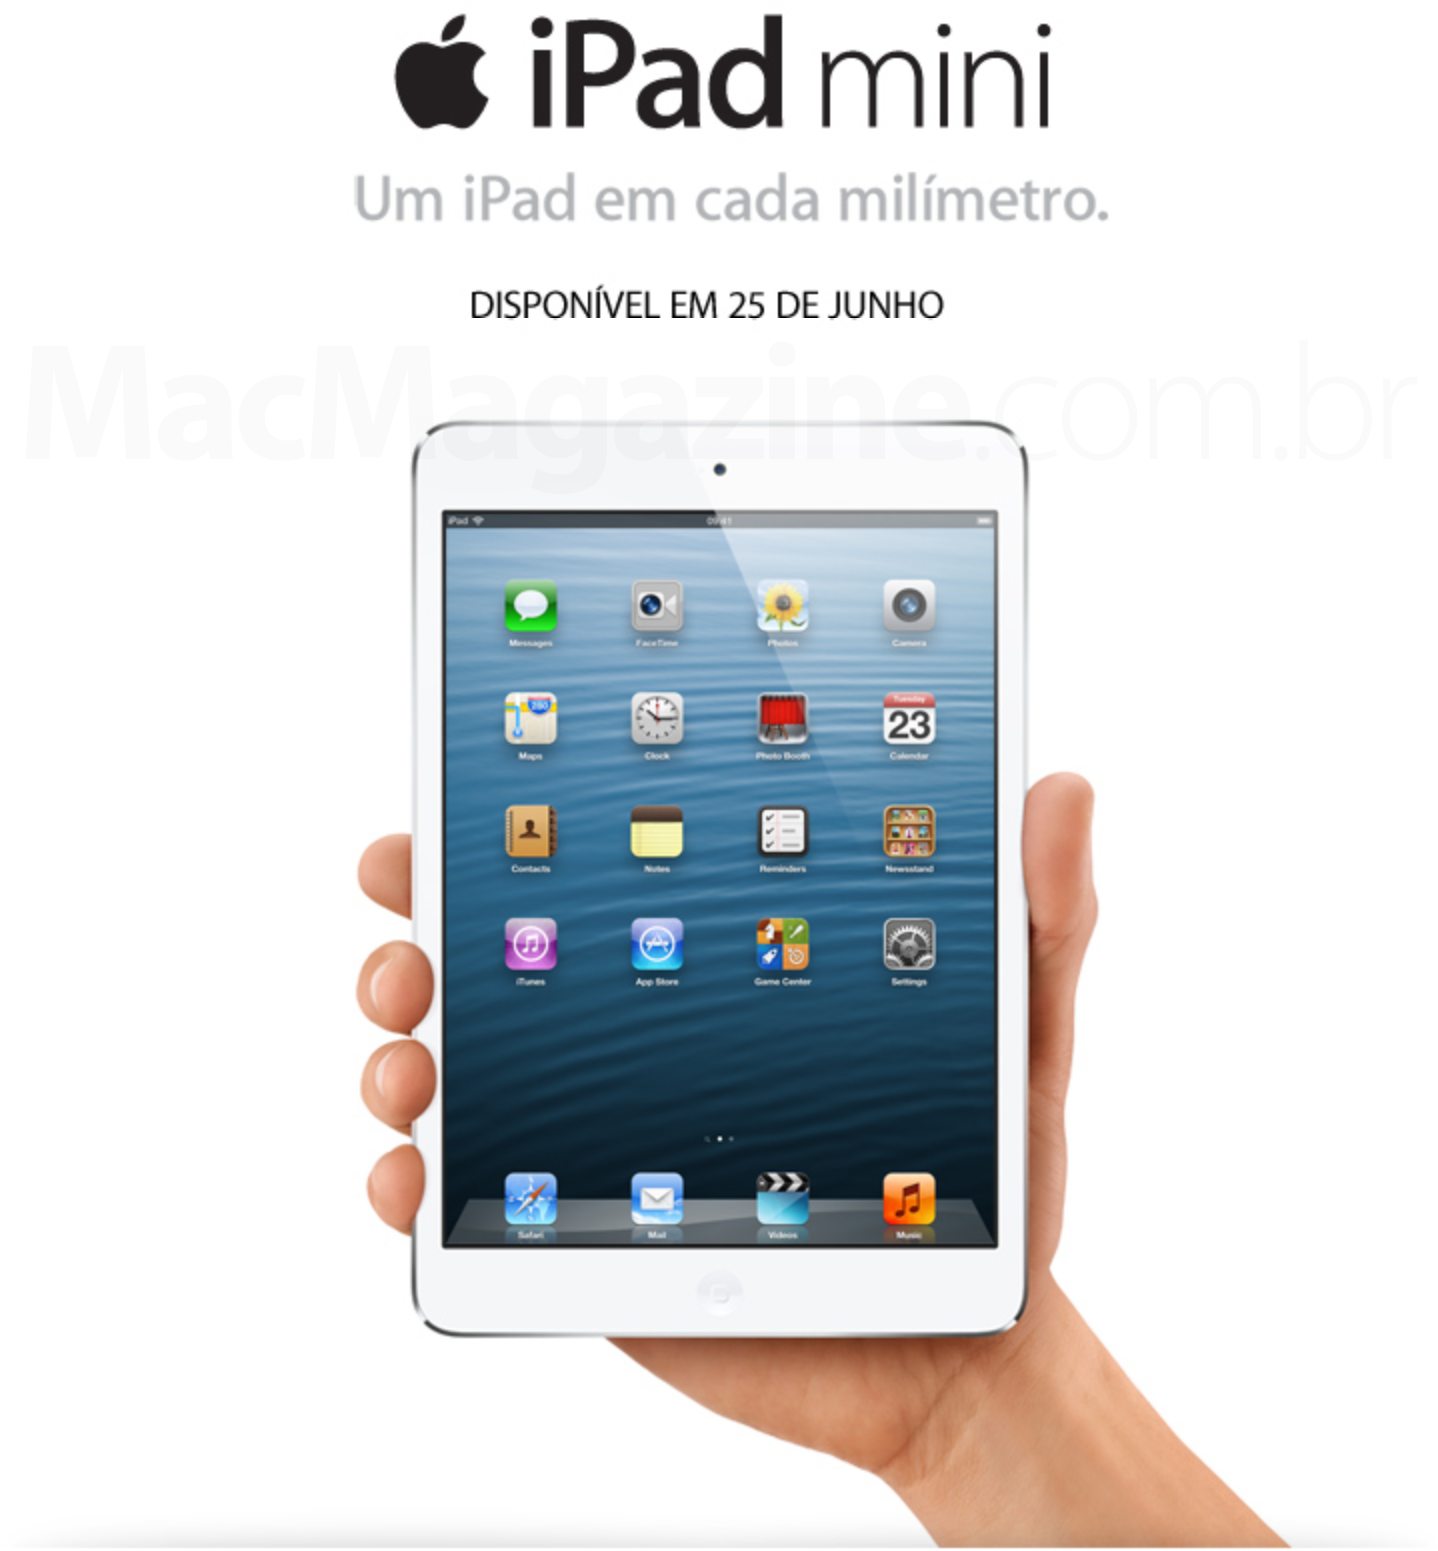 Lançamento do iPad mini no Brasil